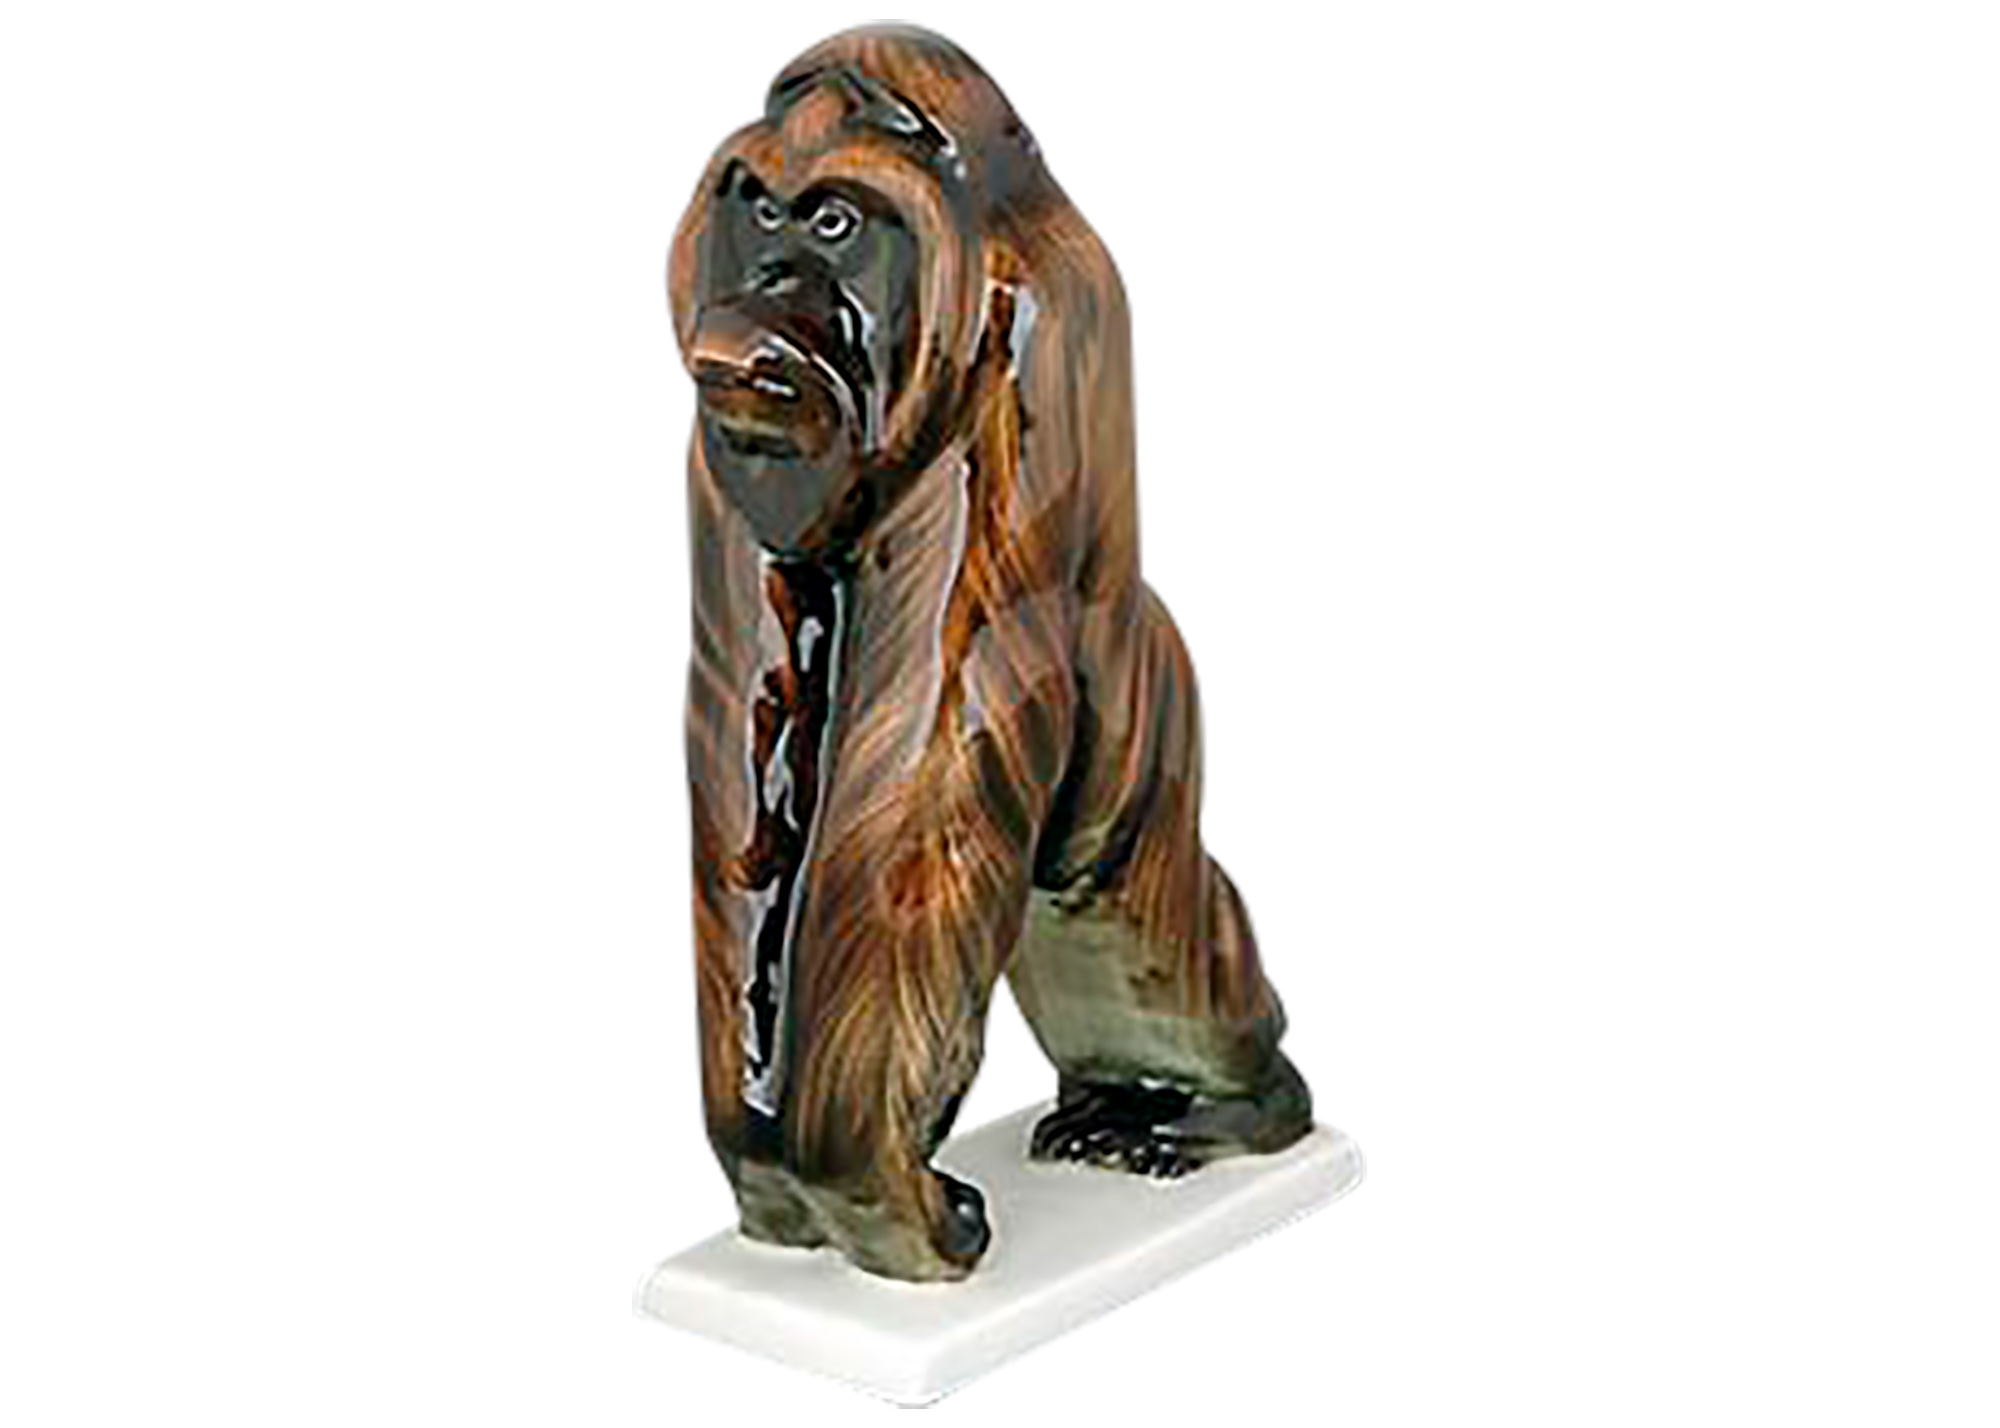 Buy Orangutan Statuette at GoldenCockerel.com